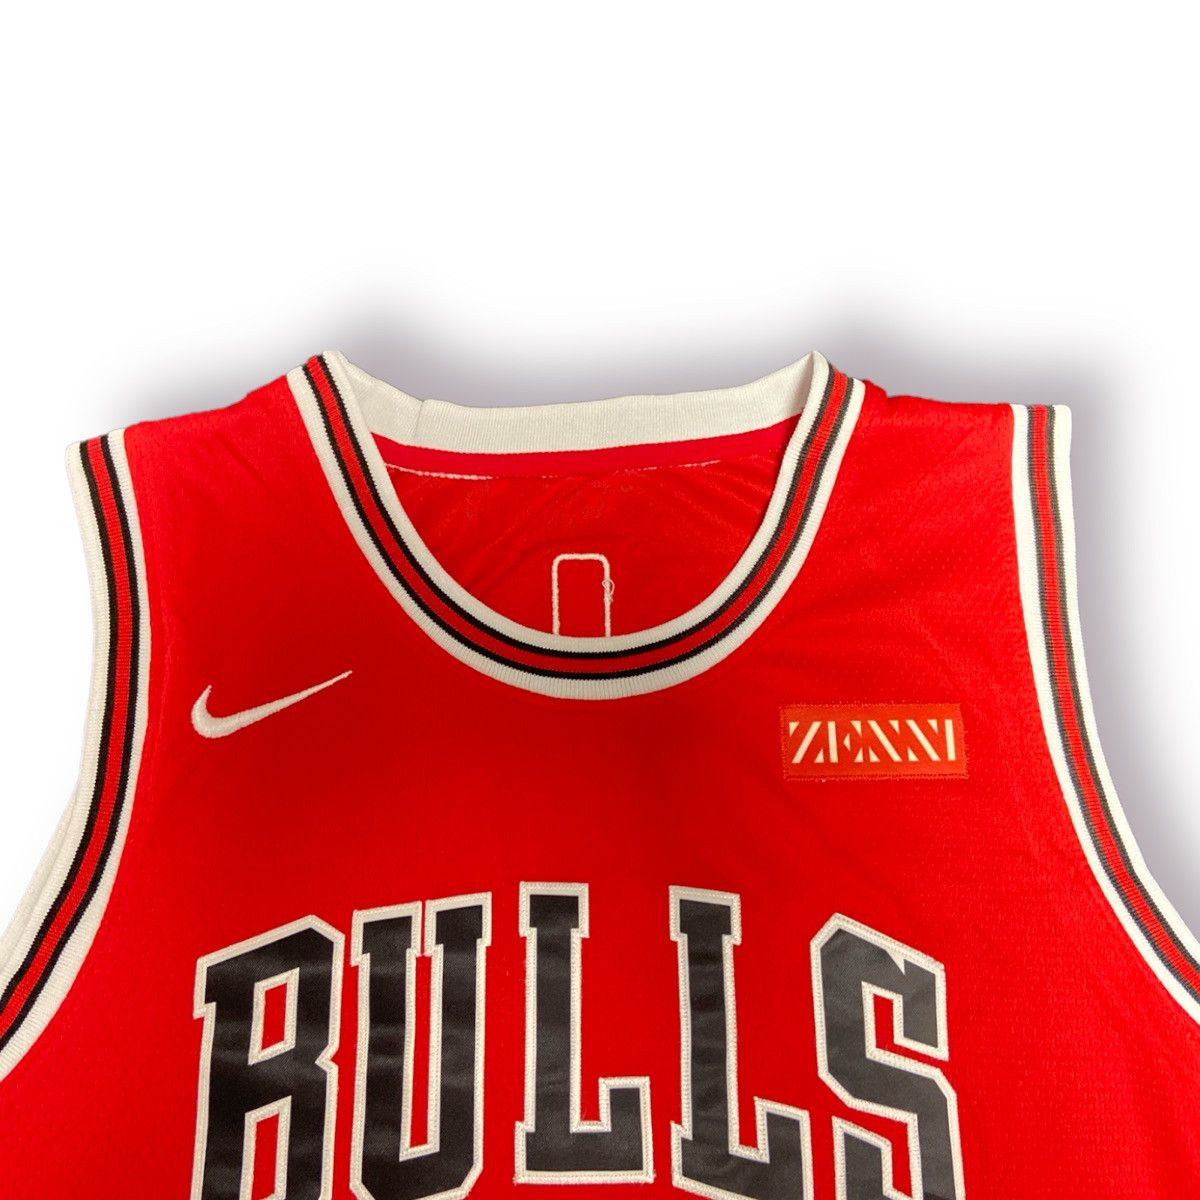 Nike Zach Lavine Nike Chicago Bulls Icon Swingman Jersey Size US L / EU 52-54 / 3 - 4 Thumbnail